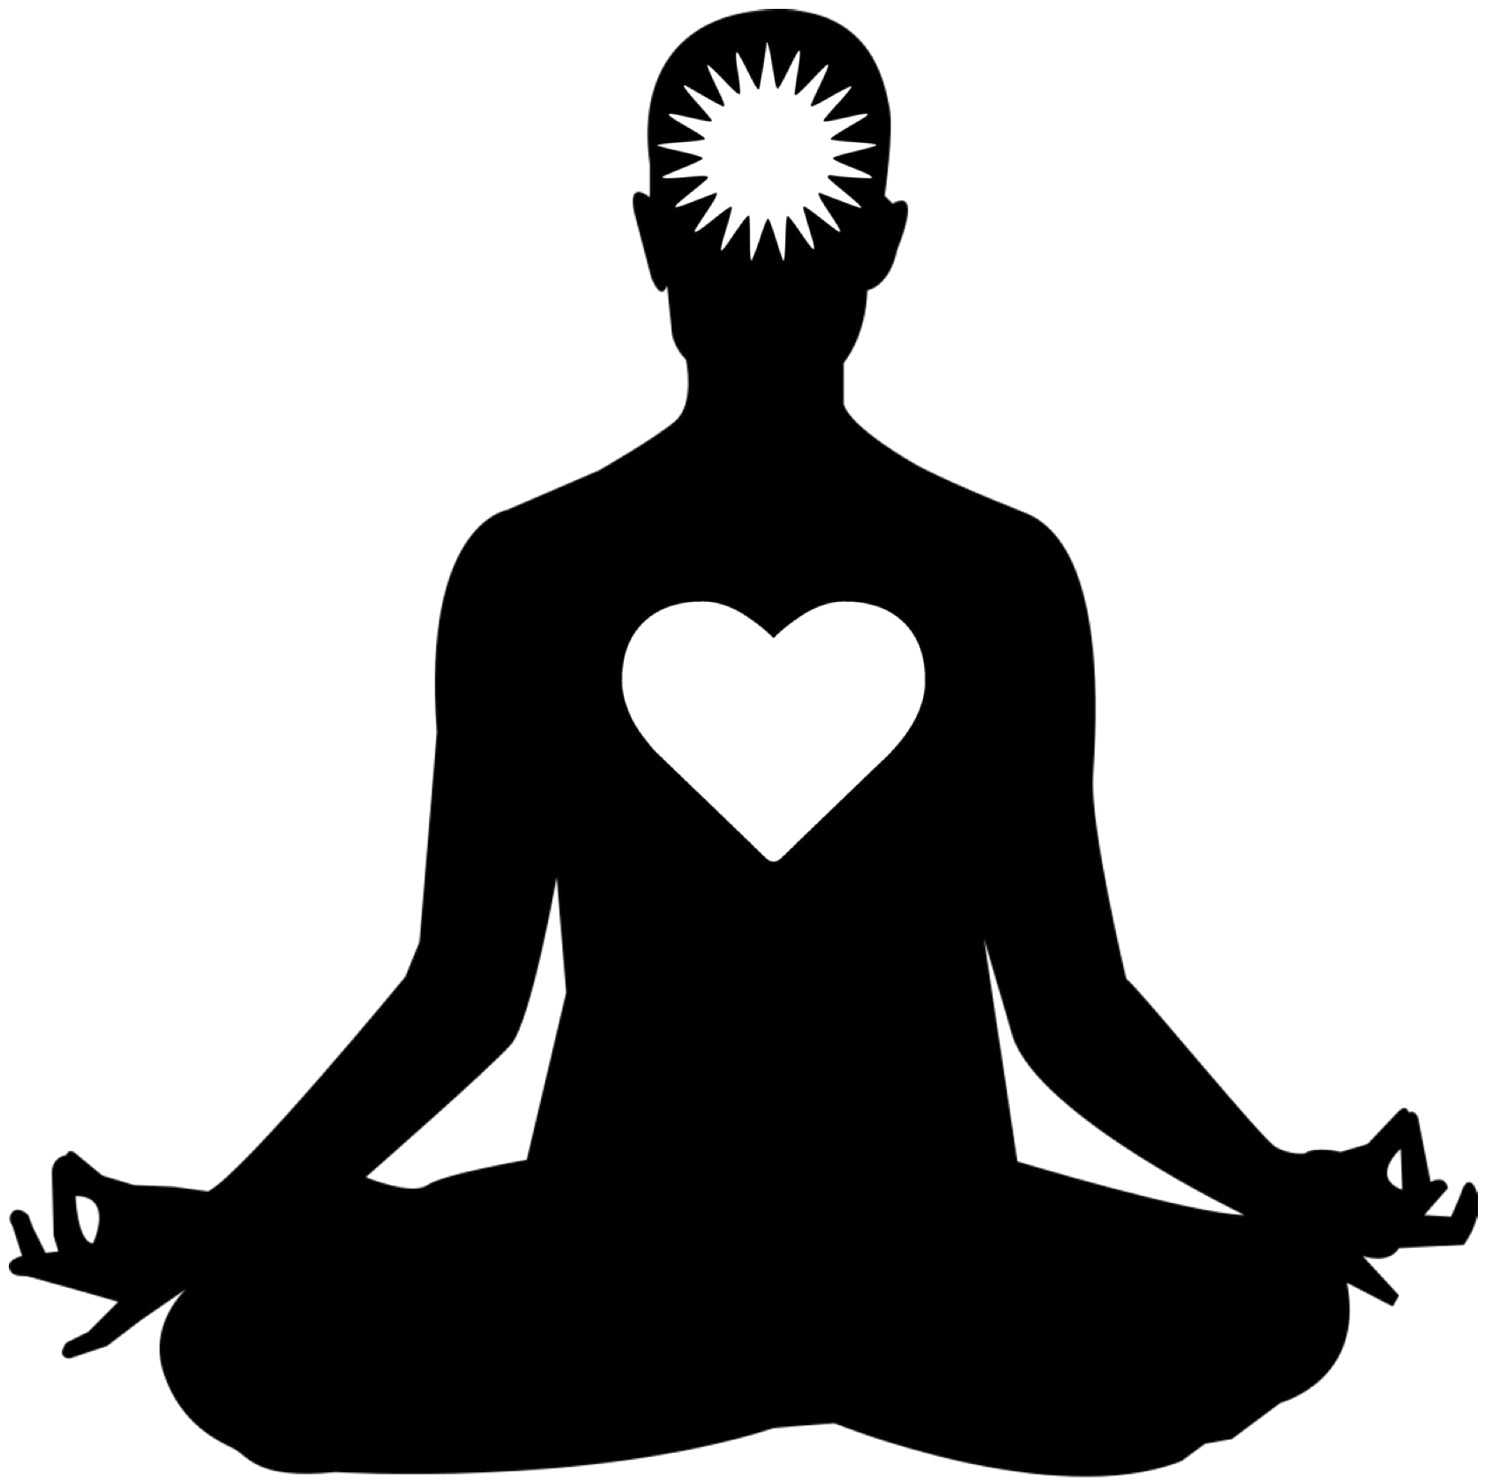 Guided meditation on self-love
Meditation on Self-Love